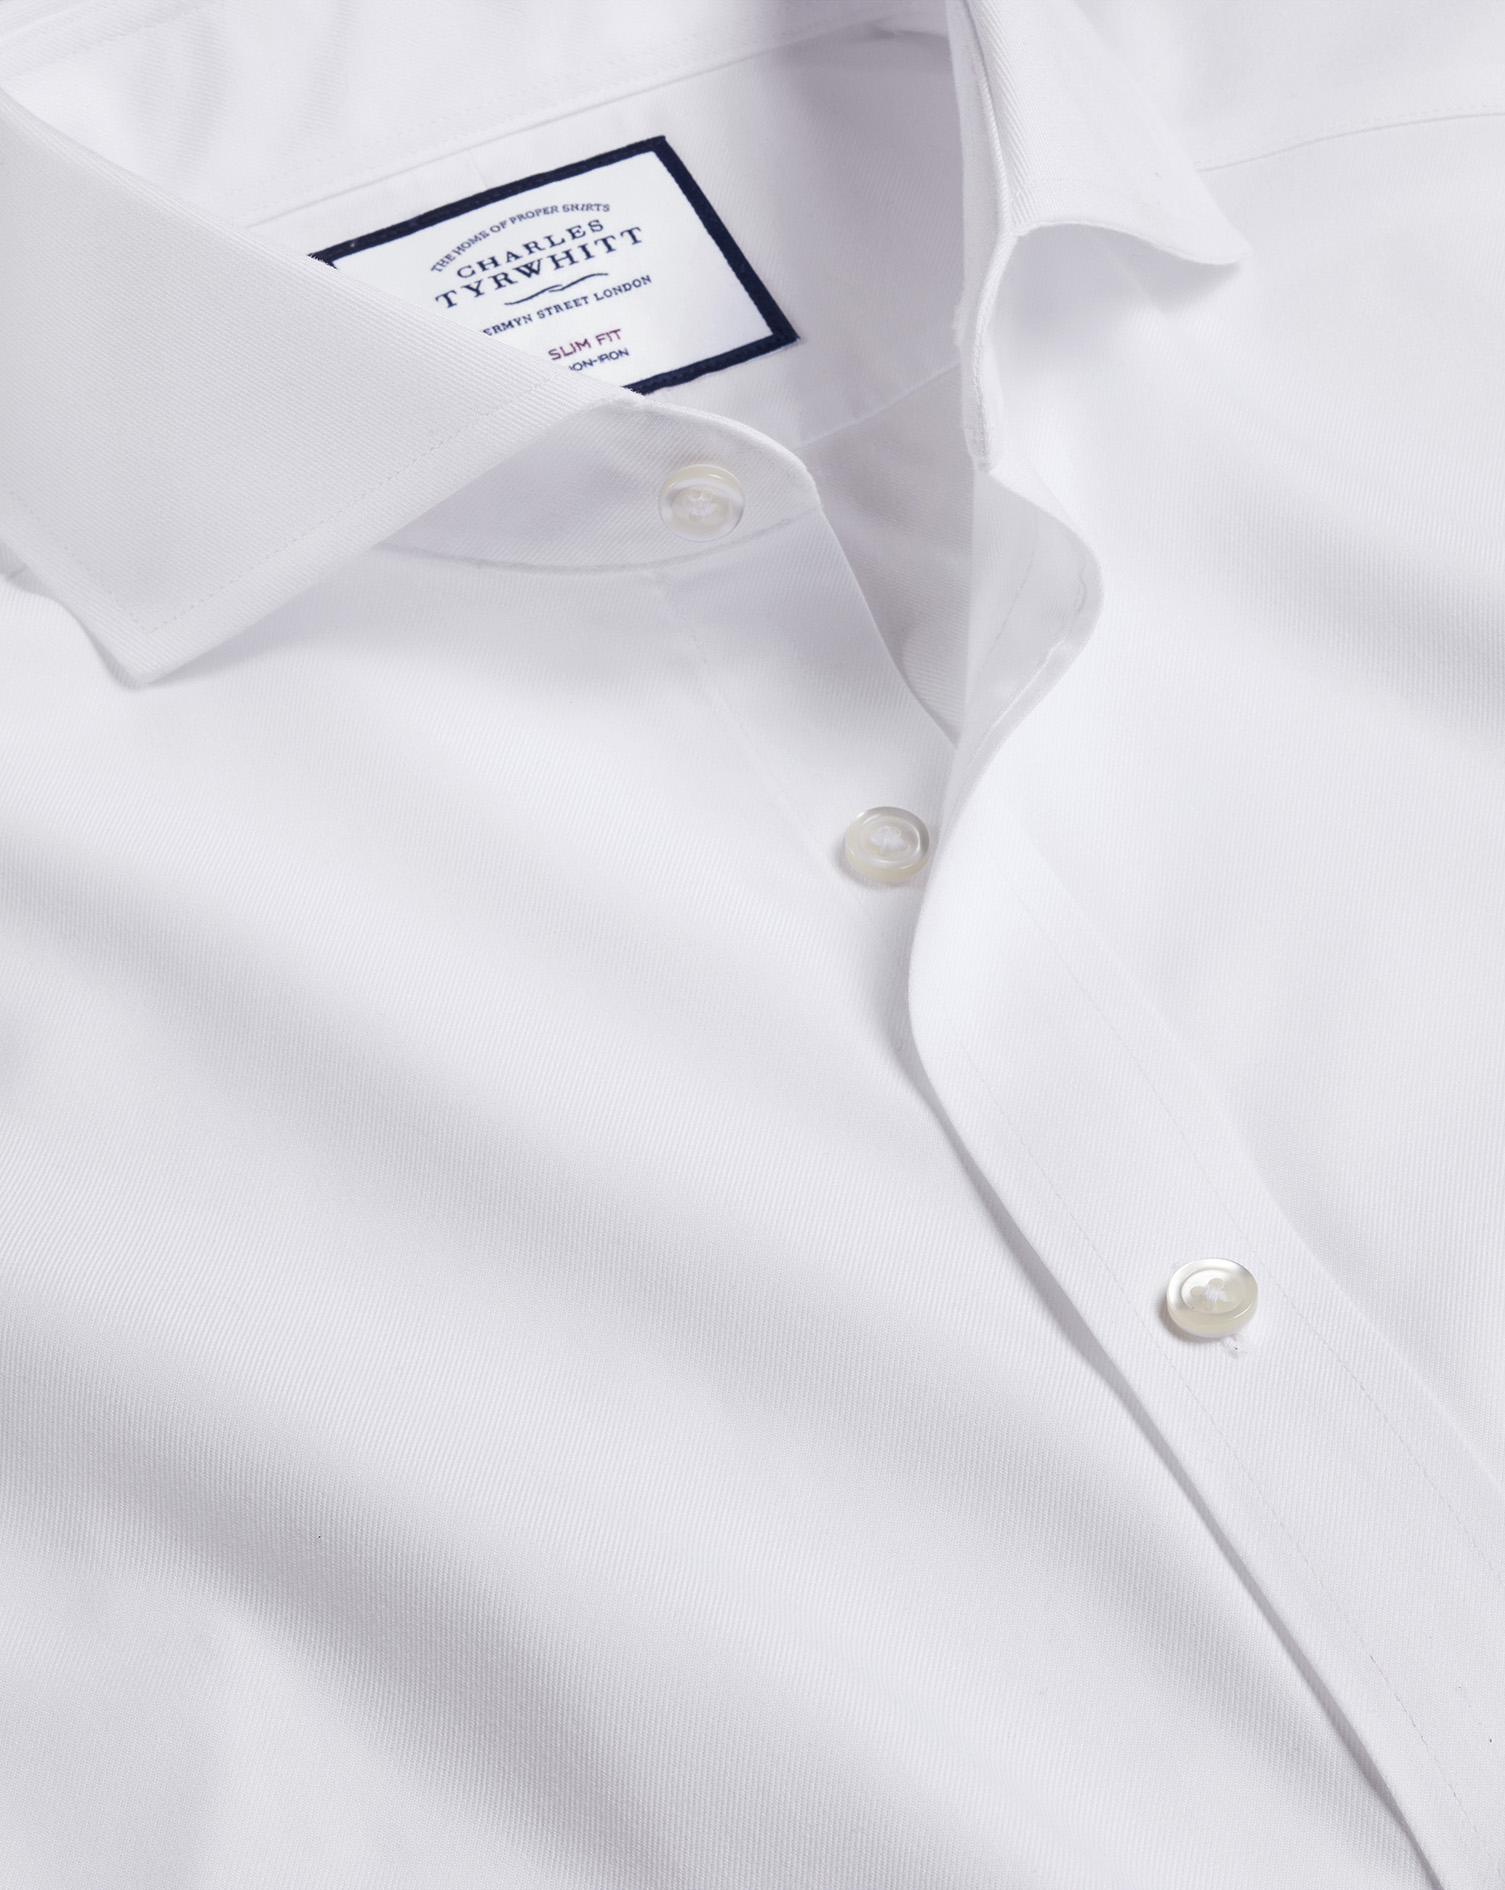 Men's Charles Tyrwhitt Extreme Cutaway Collar Non-Iron Twill Dress Shirt - White Single Cuff Size Sm